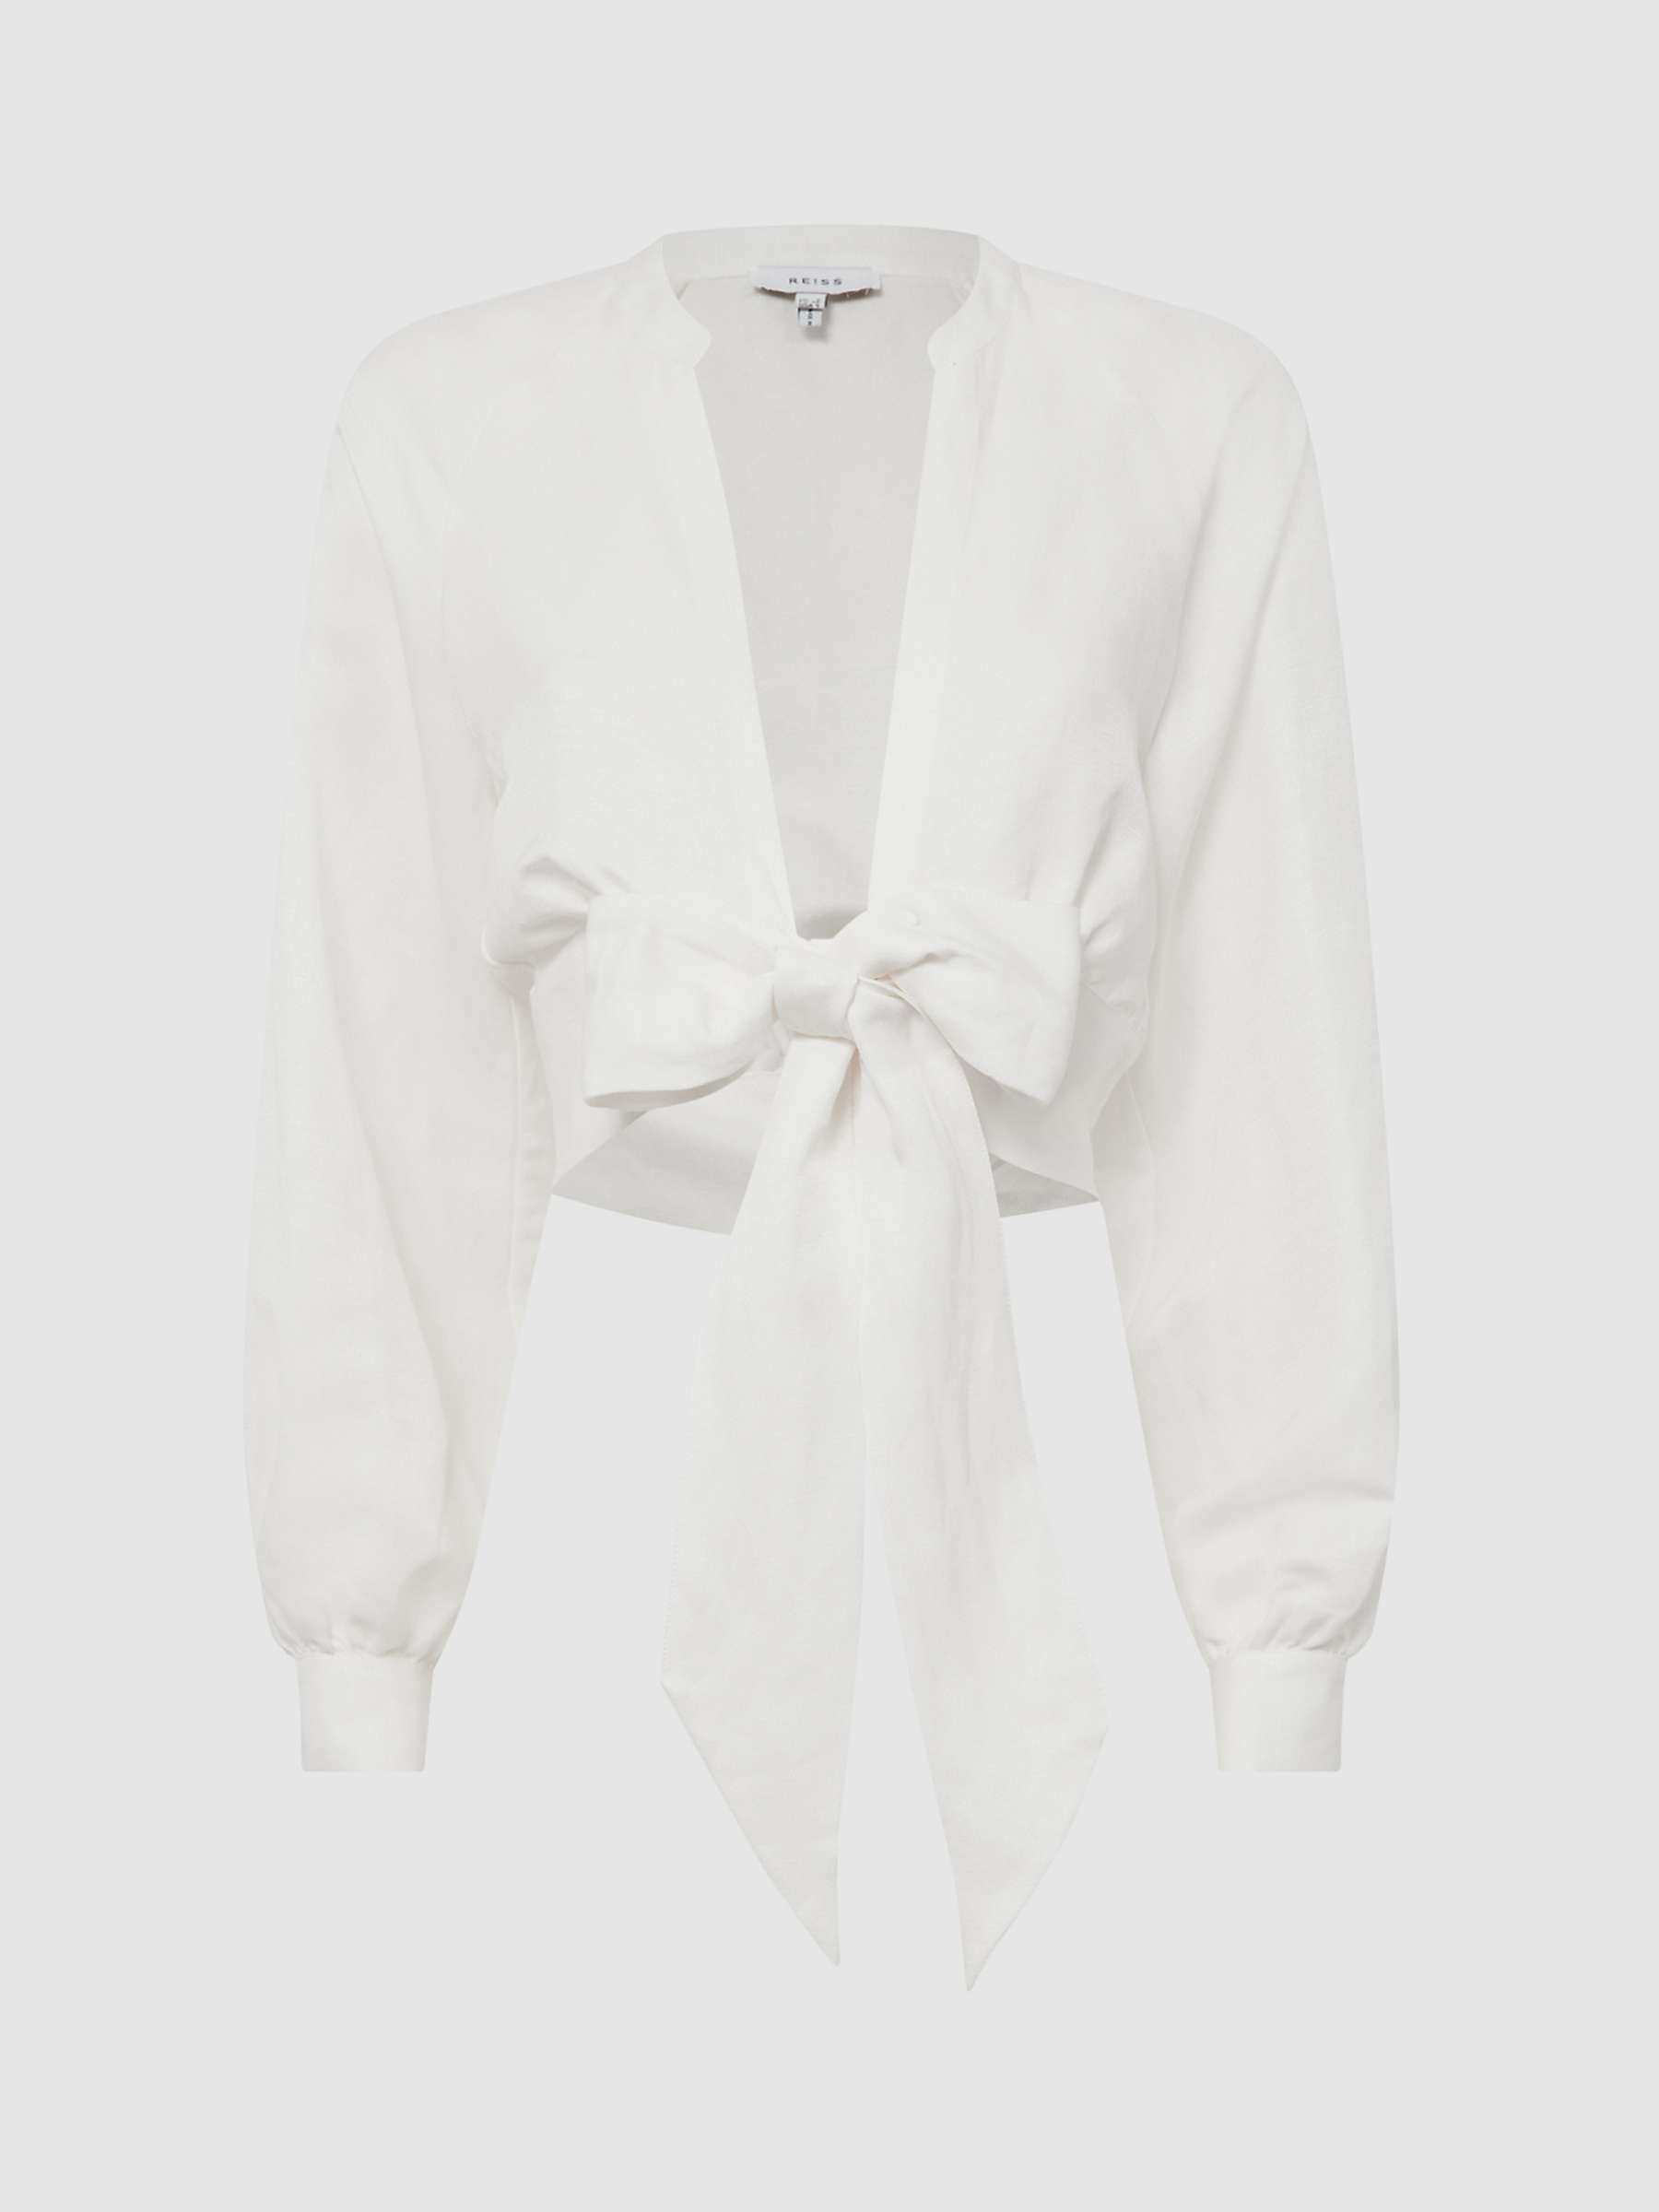 Reiss Axelle Front Tie Blouse, White at John Lewis & Partners